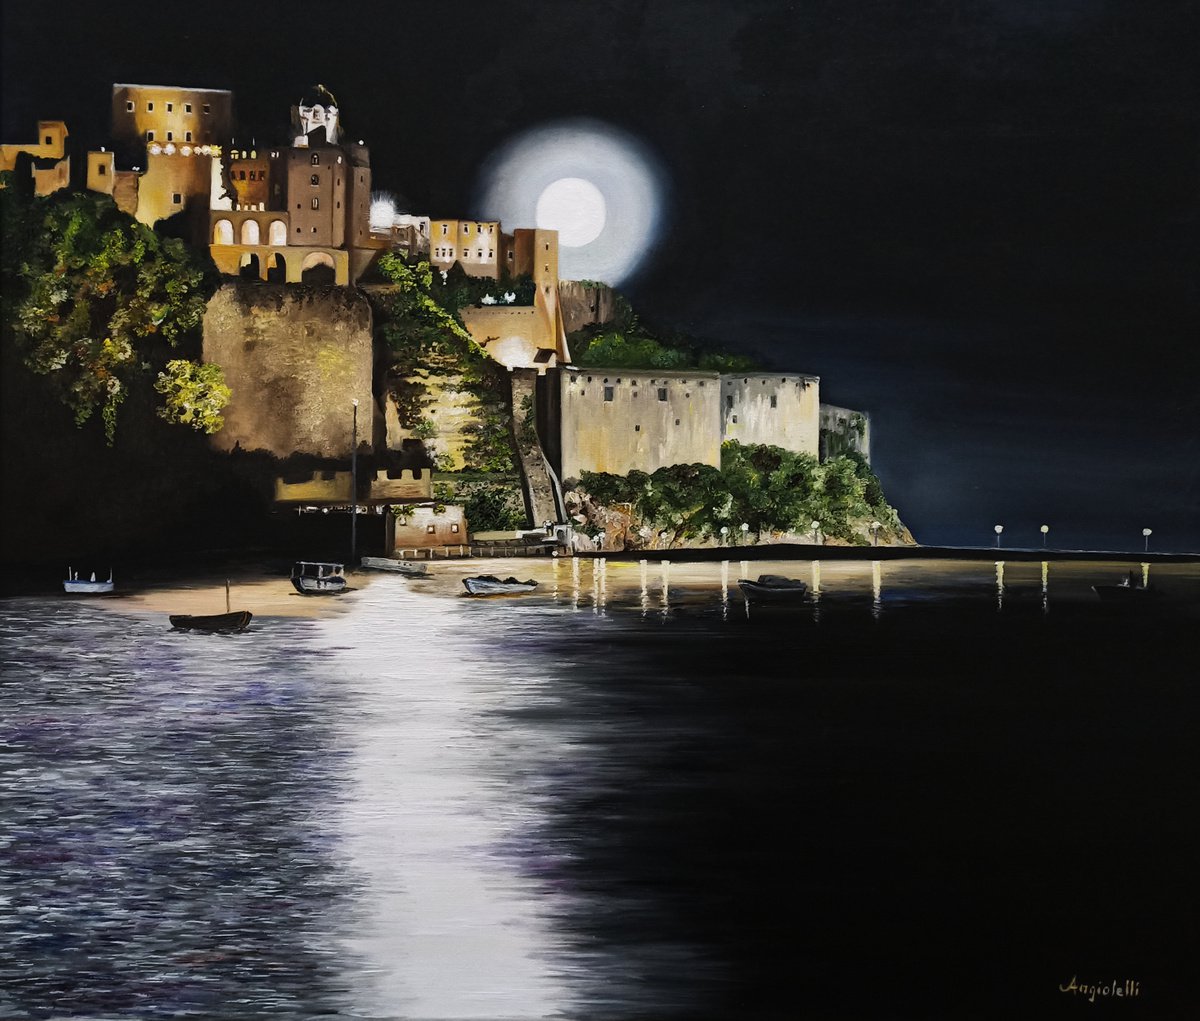 Magical night - Ischia Island by Anna Rita Angiolelli